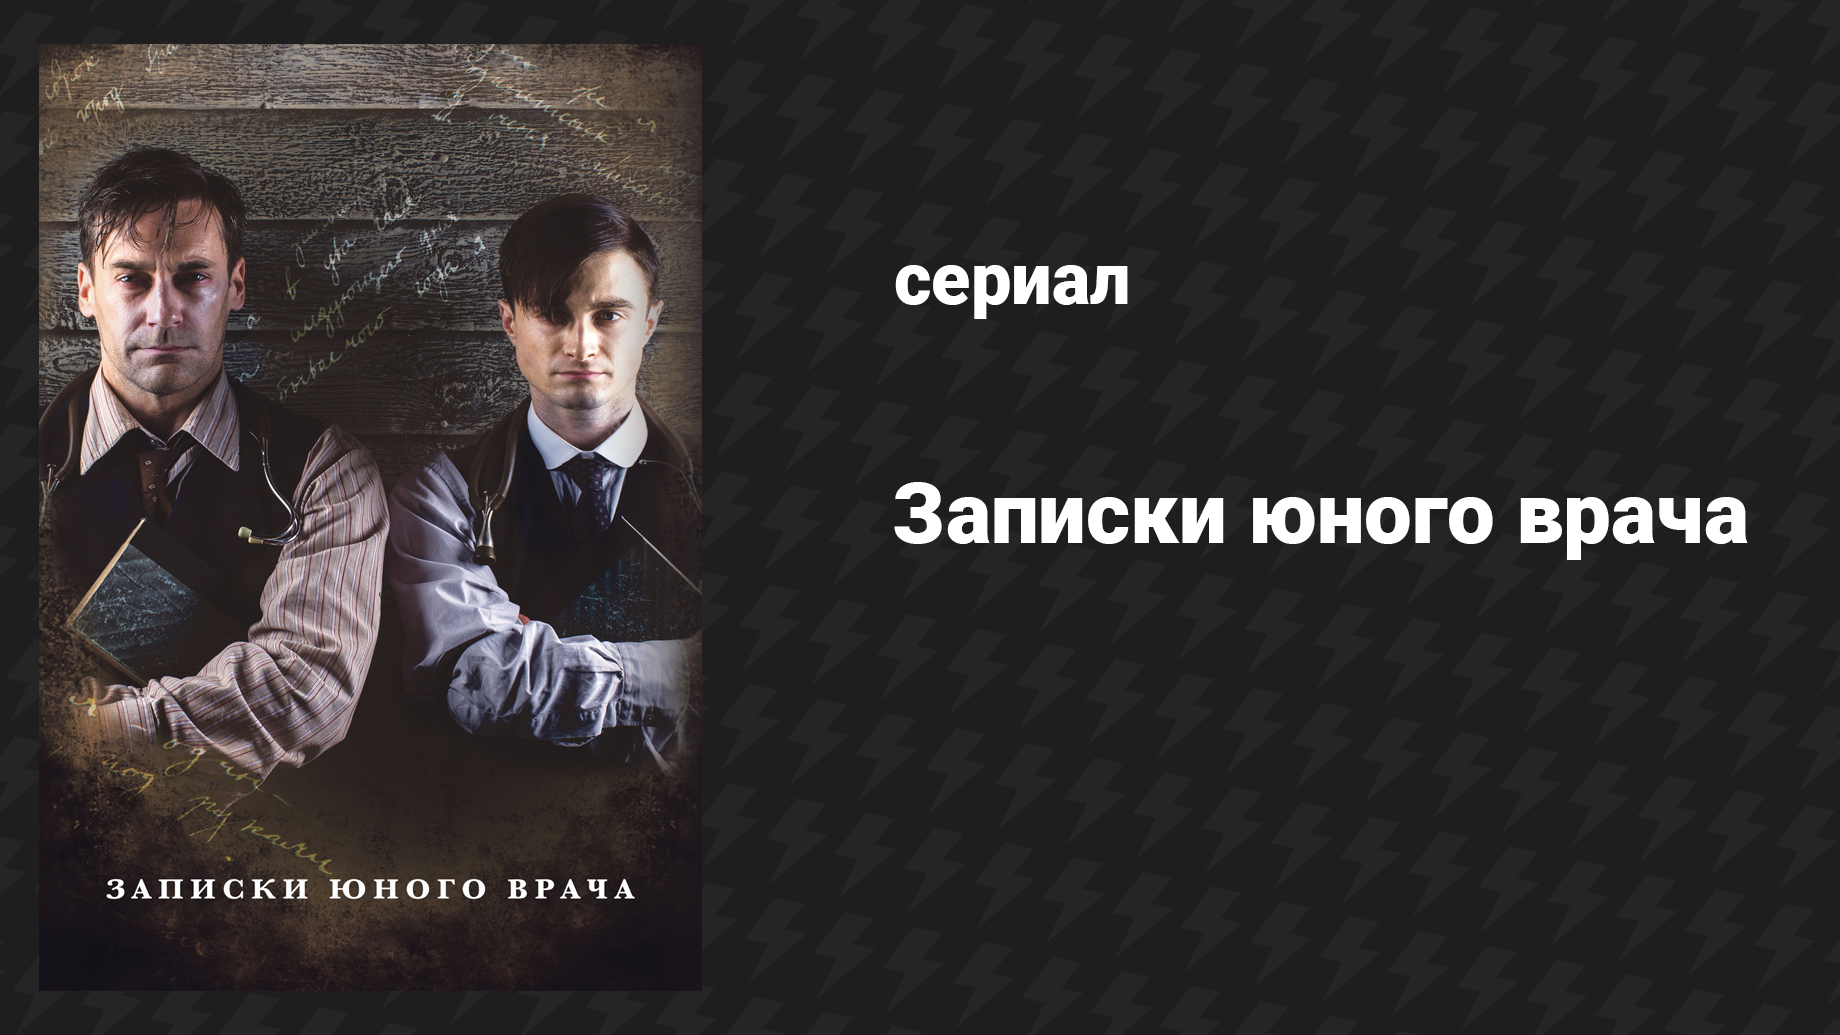 Записки юного врача 1 сезон 2 серия (сериал, 2012)